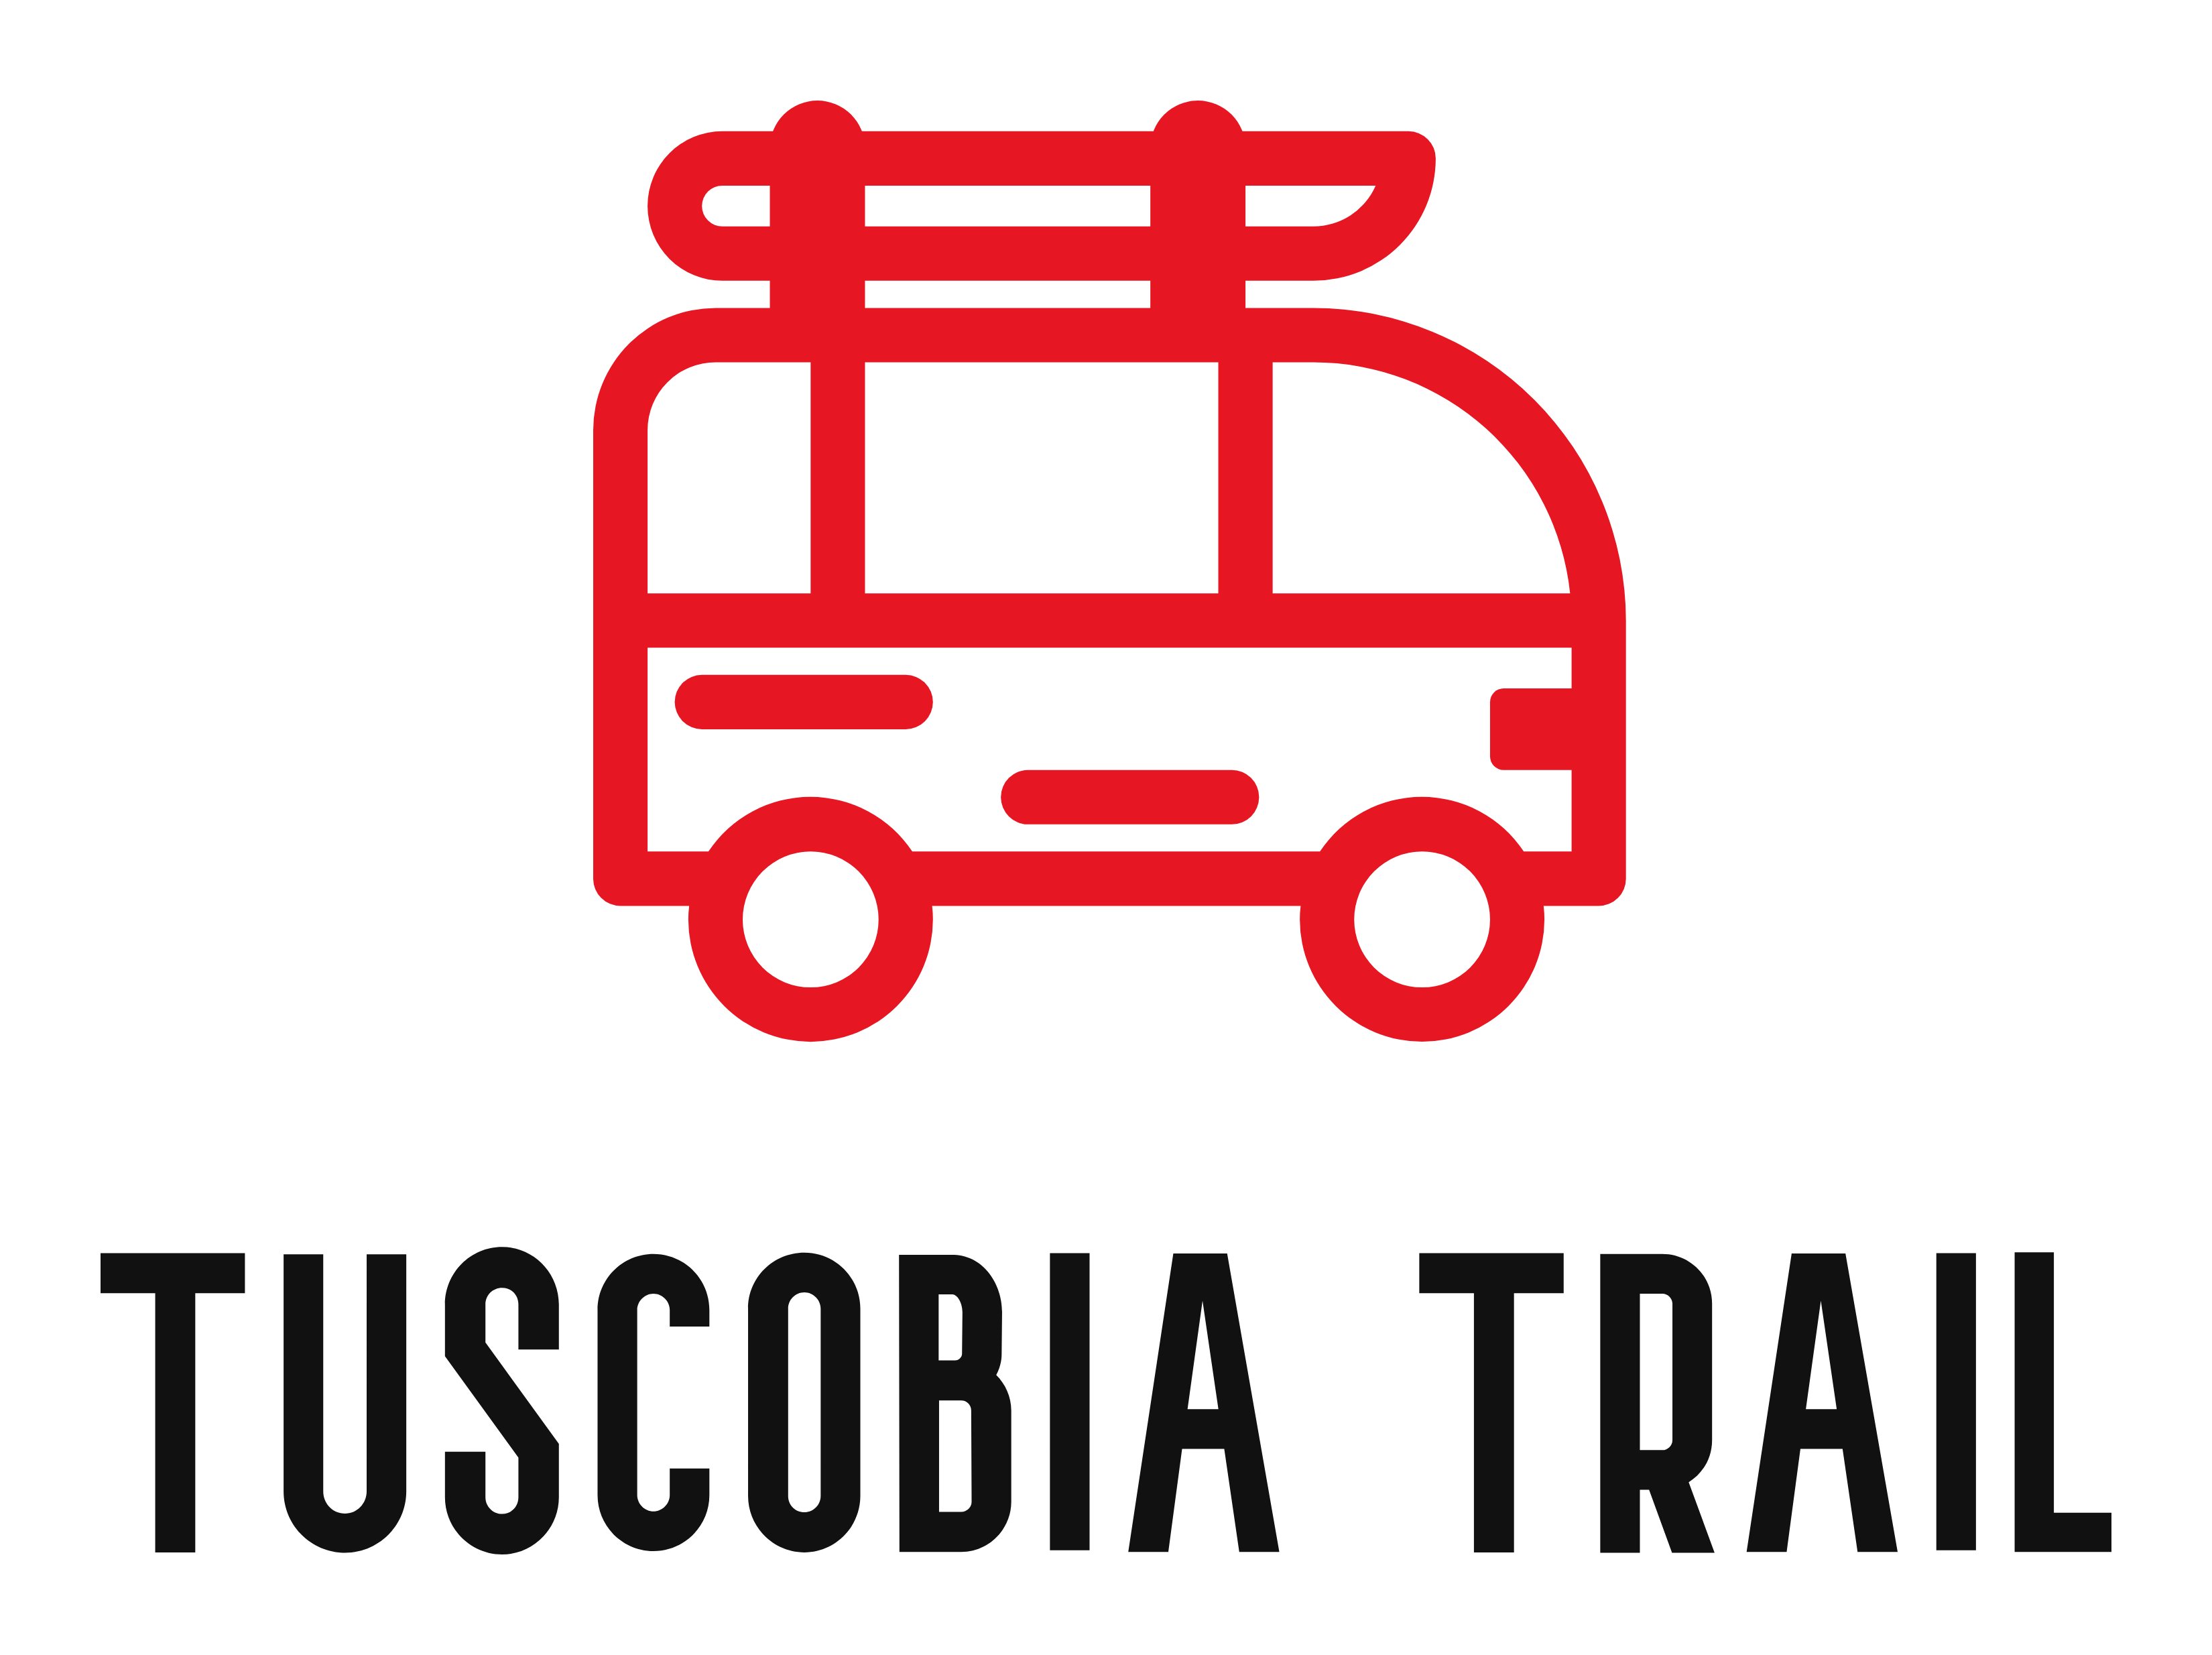 Tuscobia Trail logo